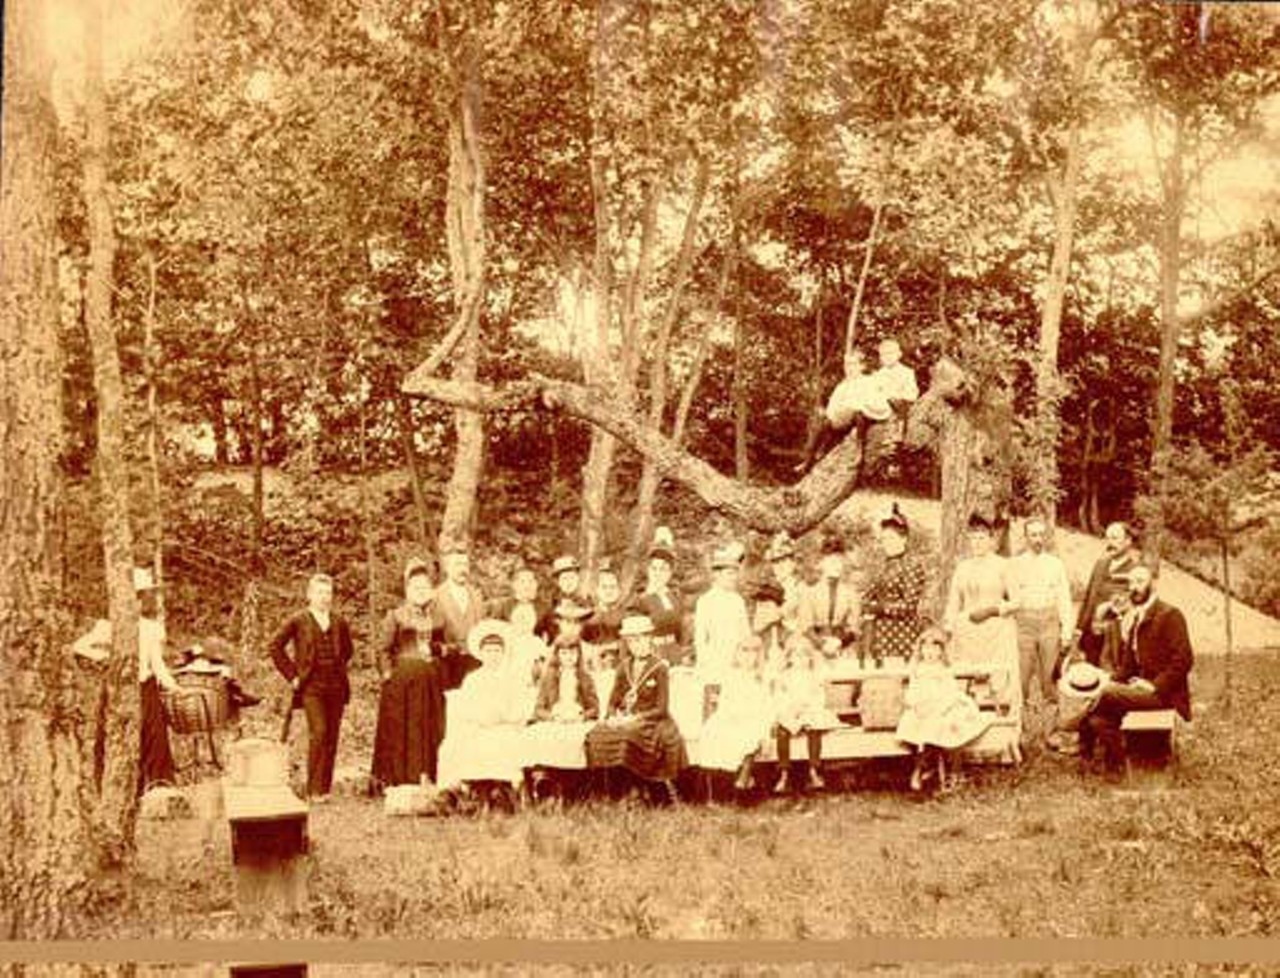 Cedar Point family picnic, 1906.